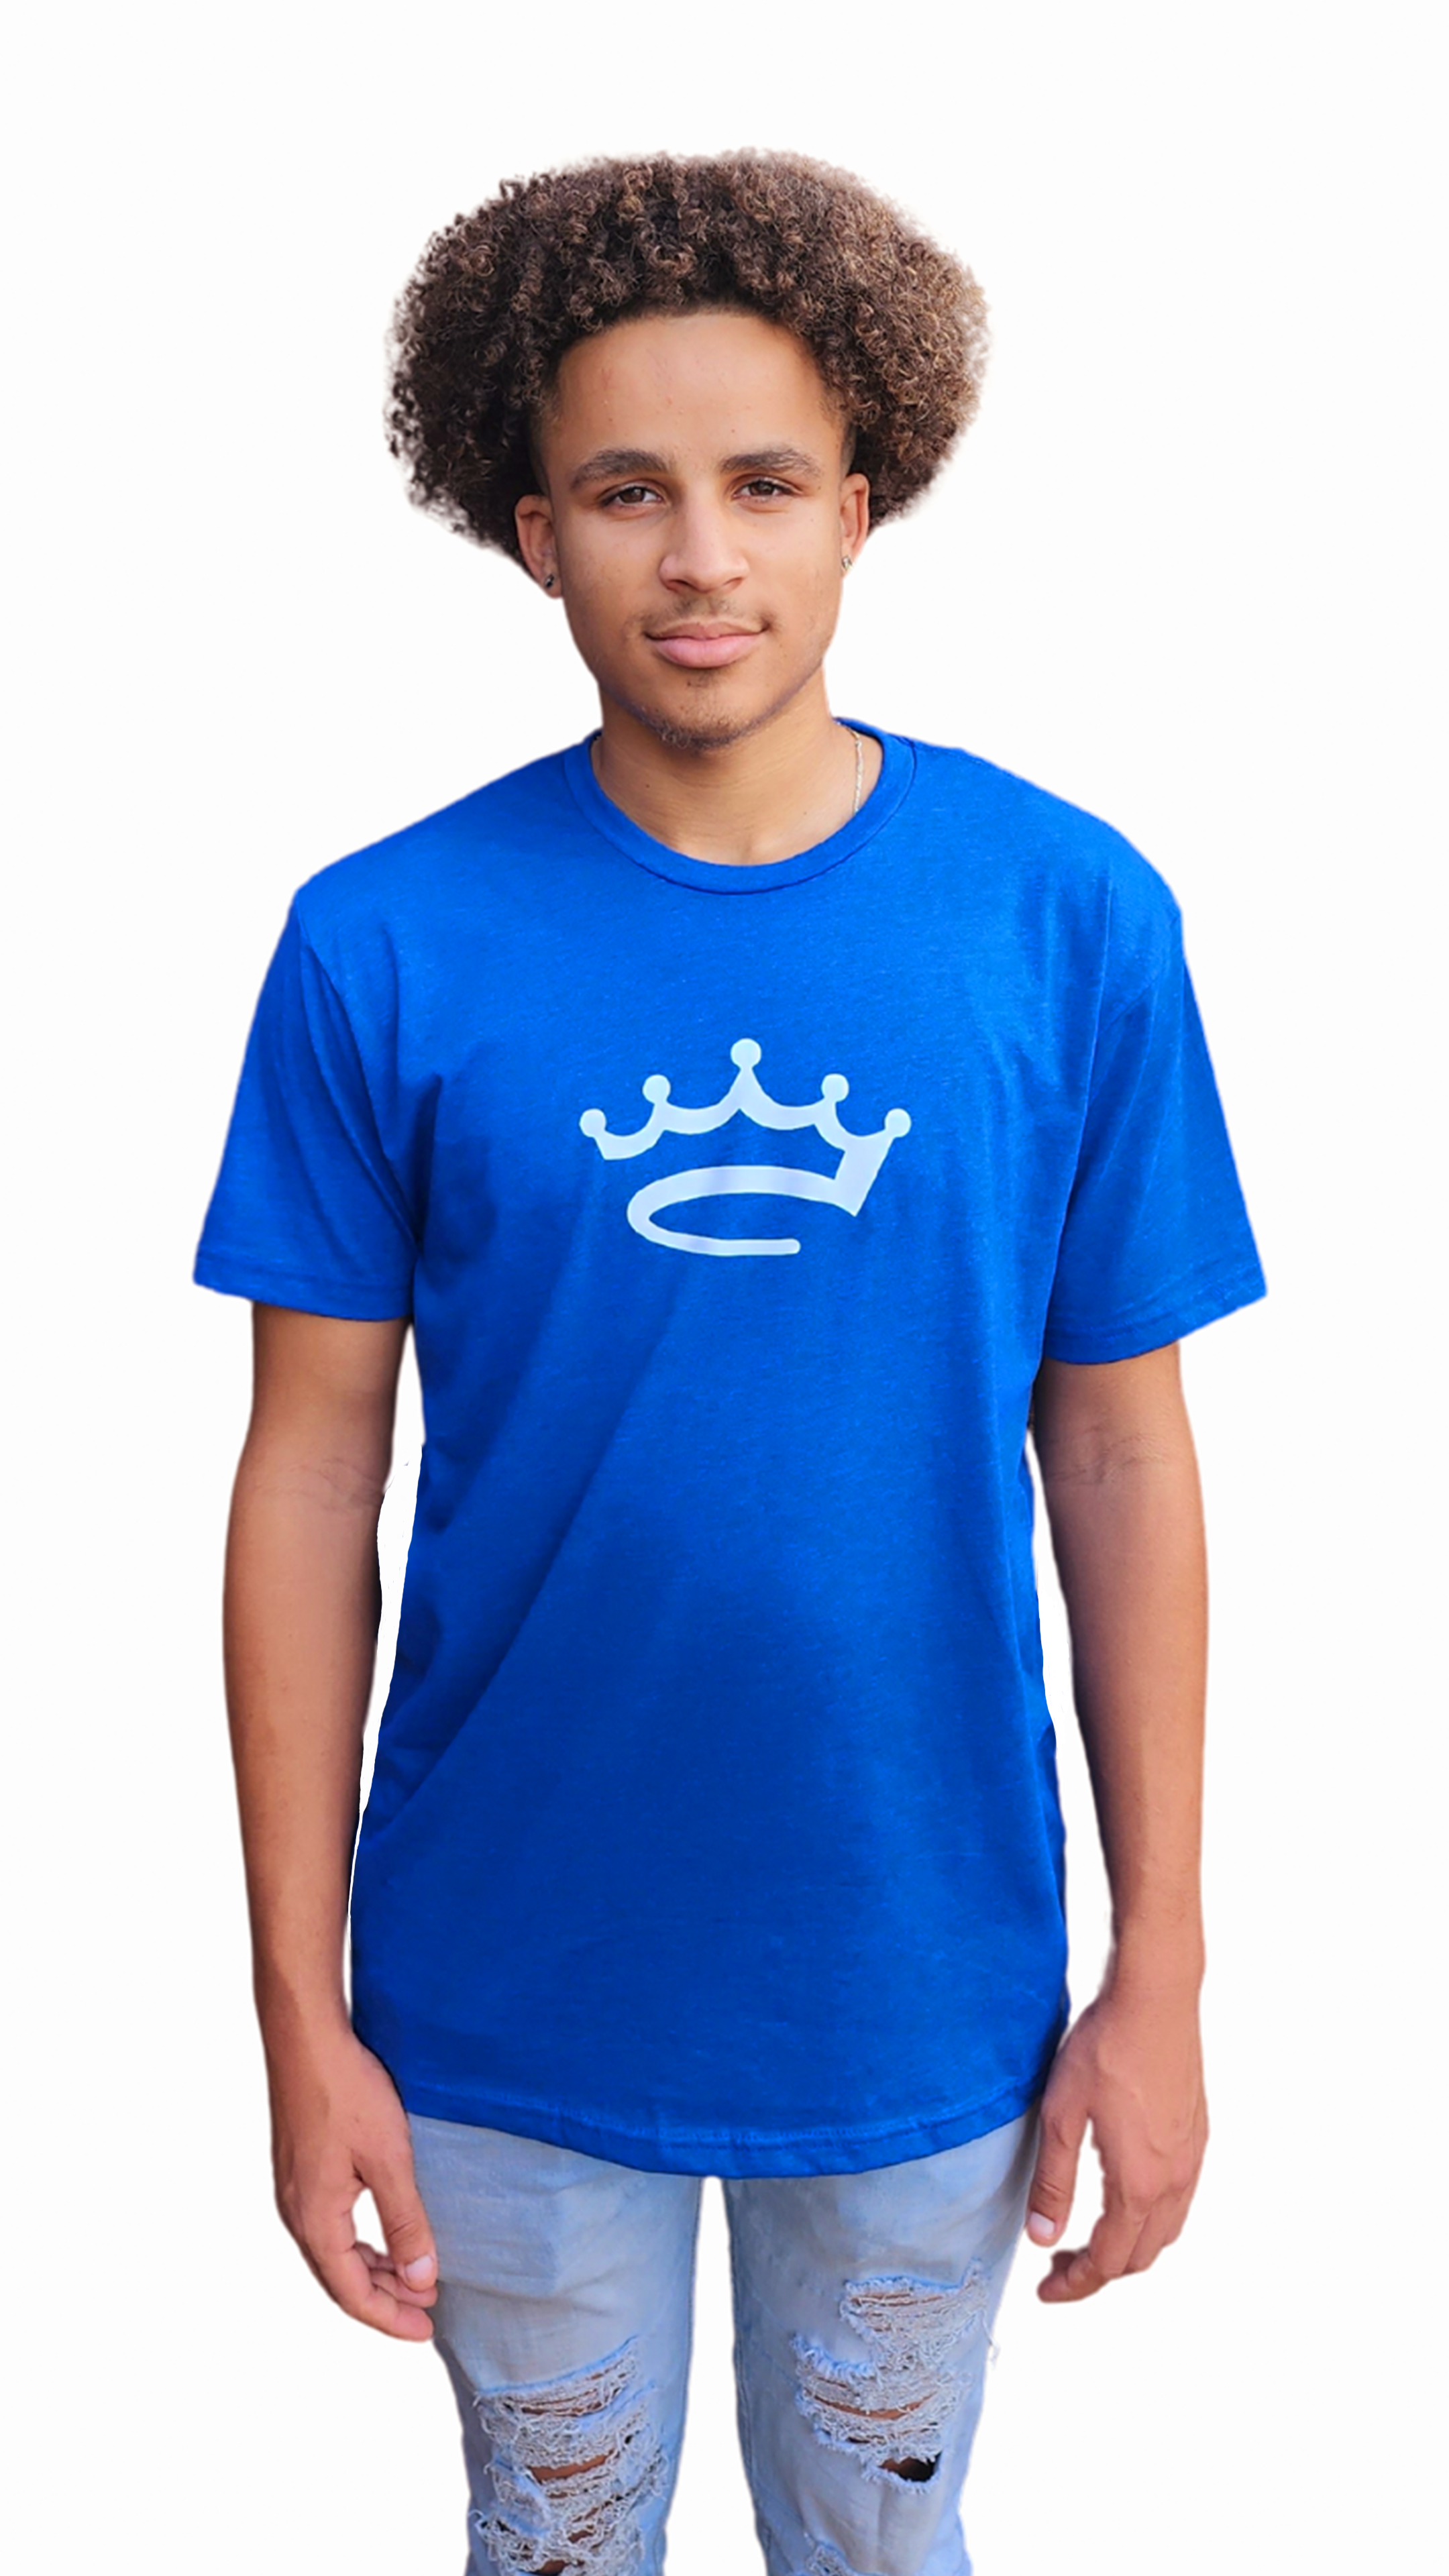 Men's Blue / White - Crowned Brand ™